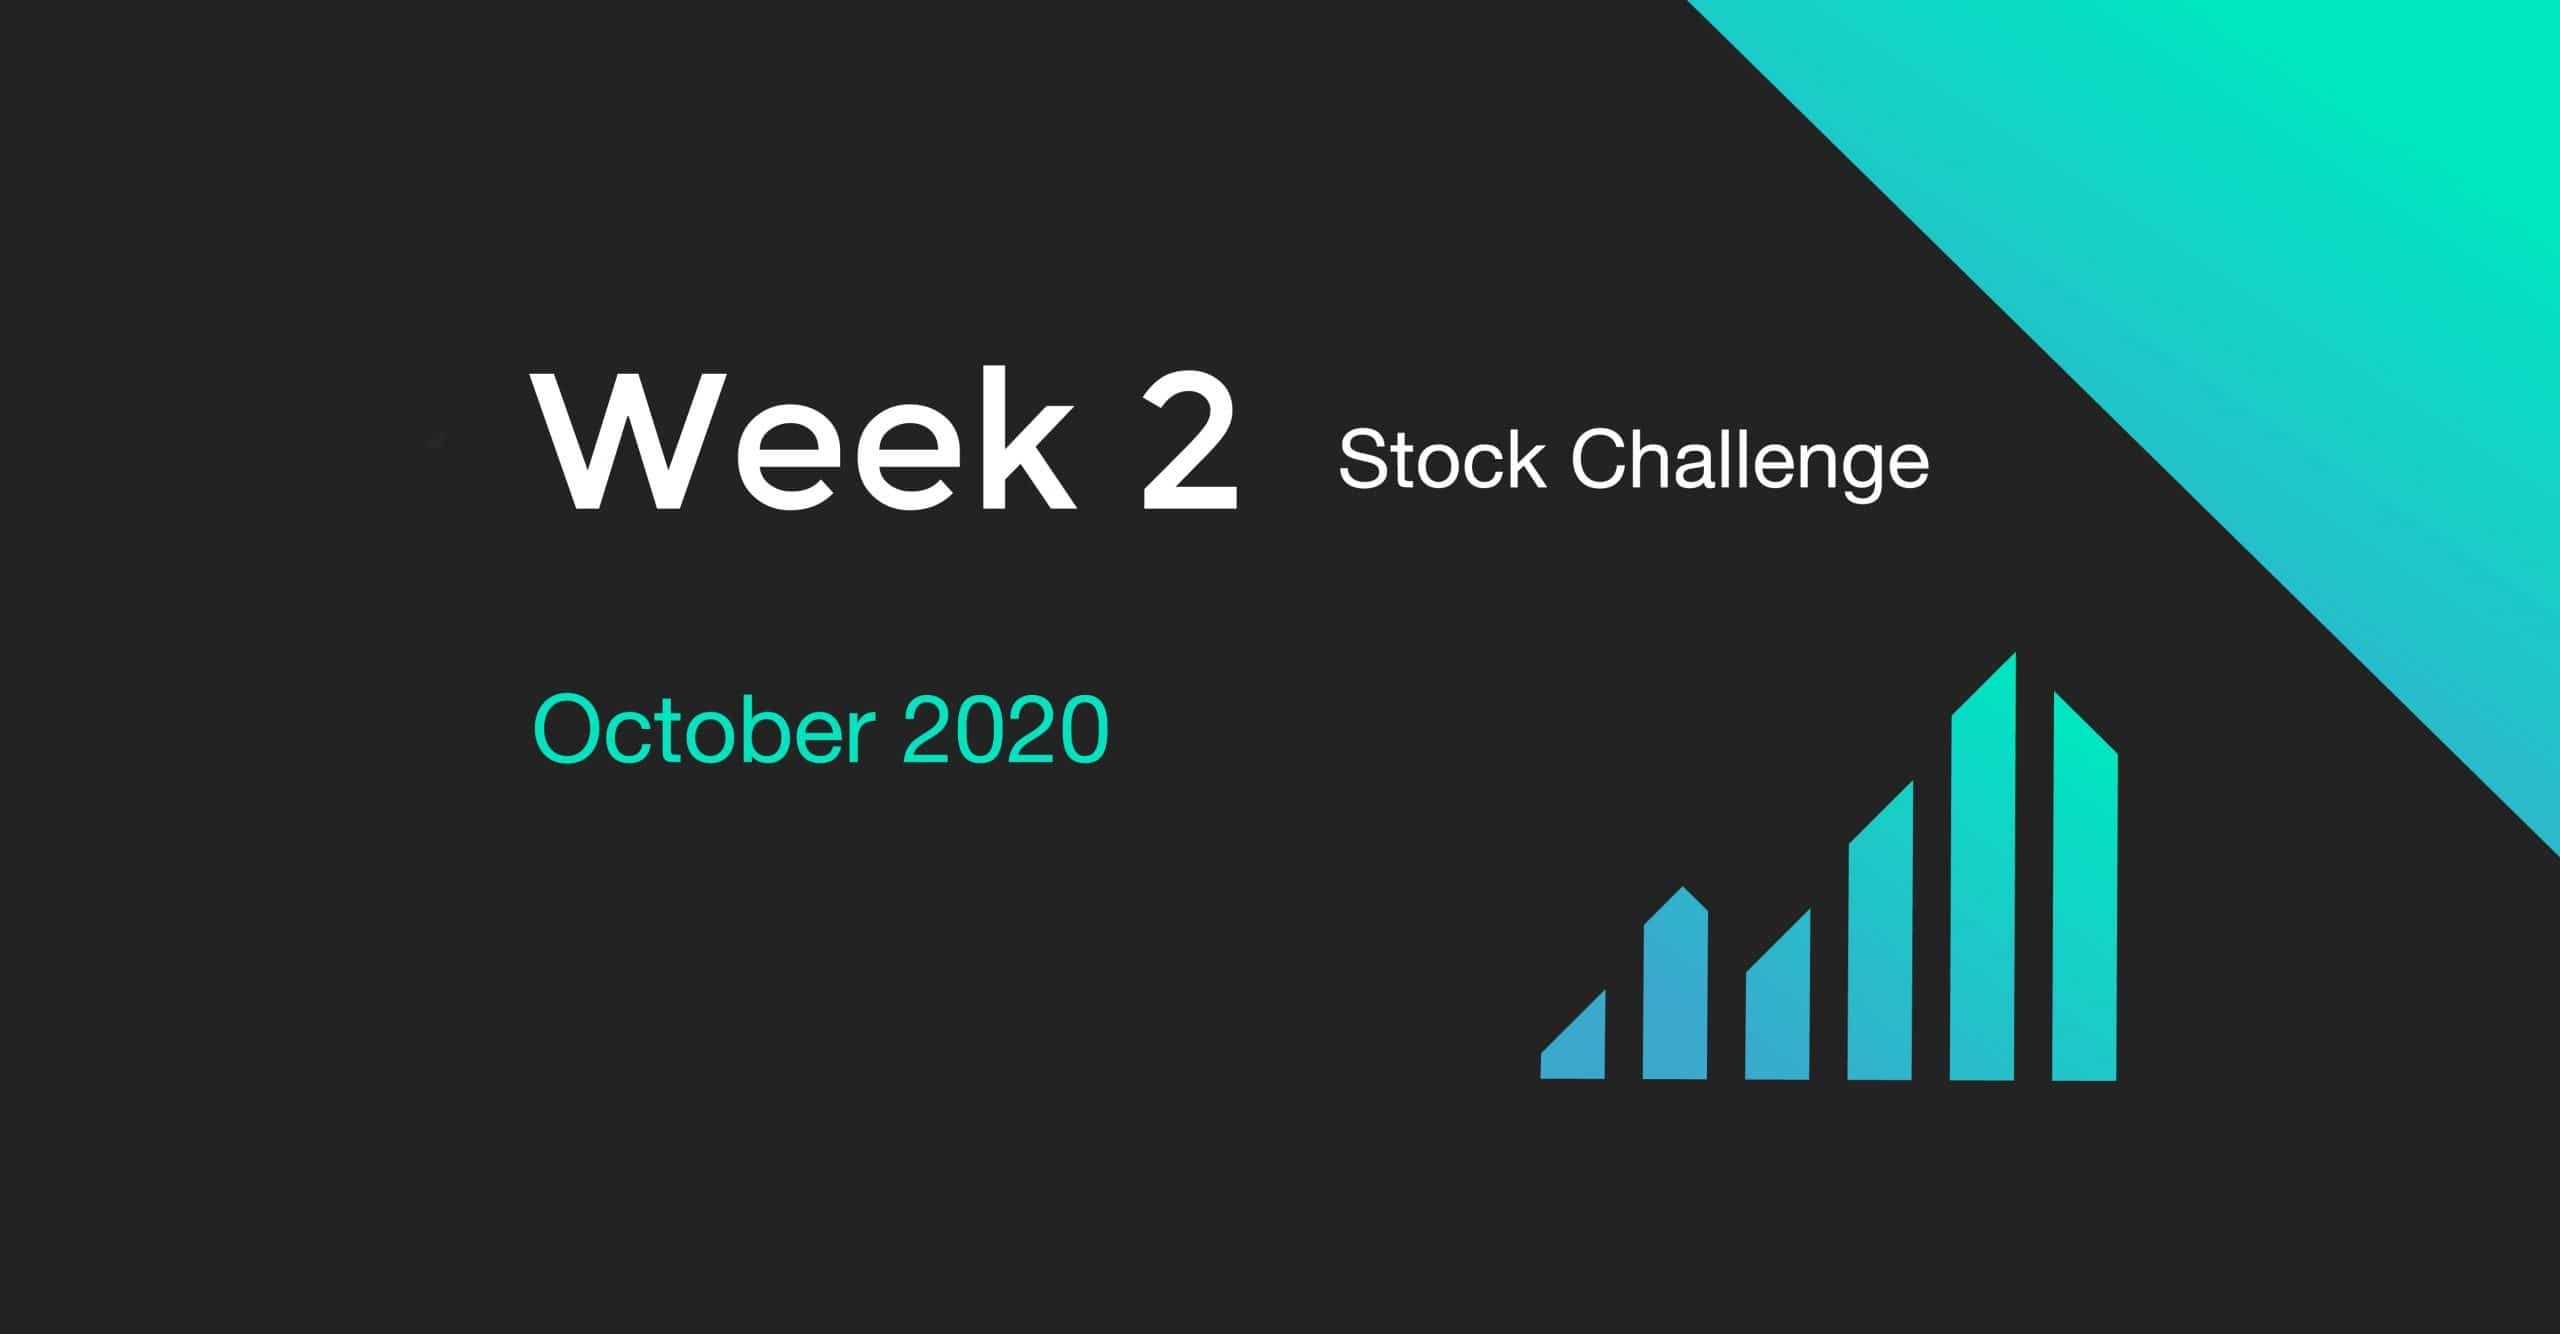 Week 2 of the October 2020 Stock Challenge